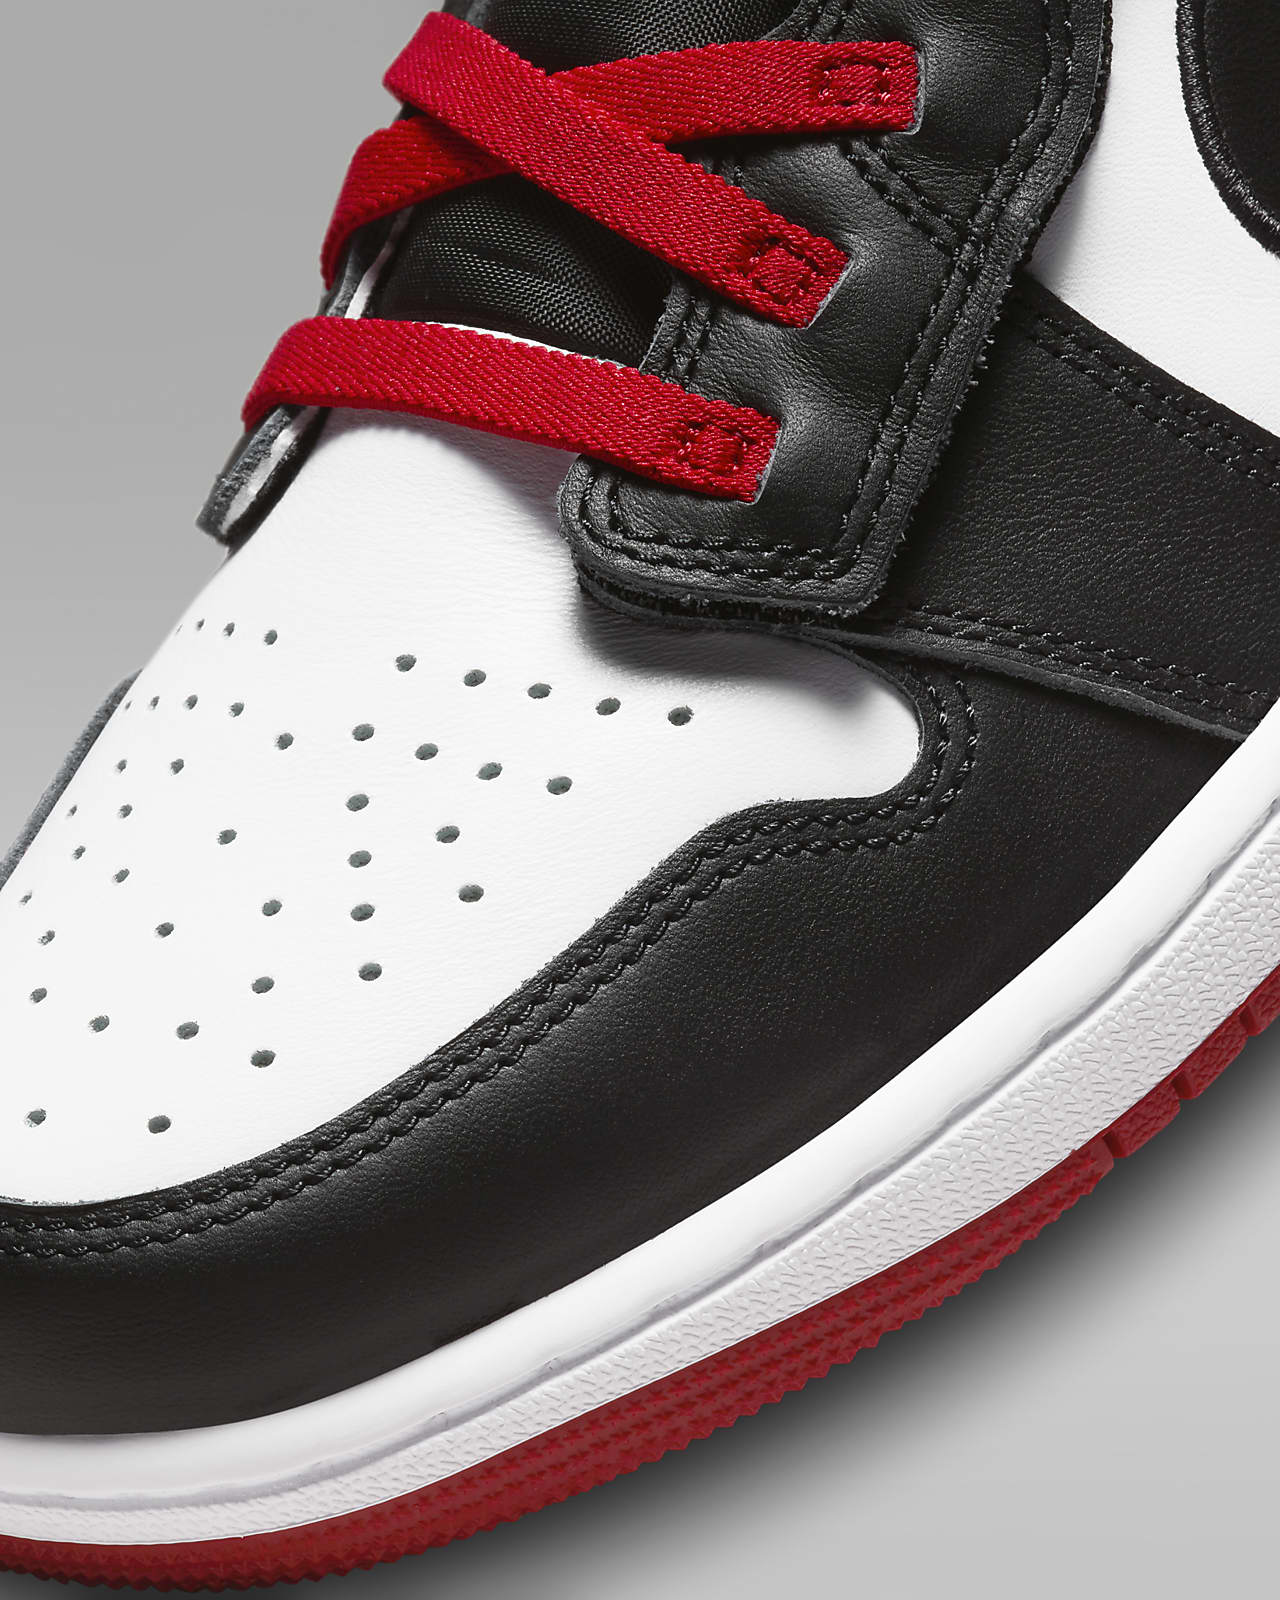 Black Toe Jordan 1 Custom Hand Painted Shoes